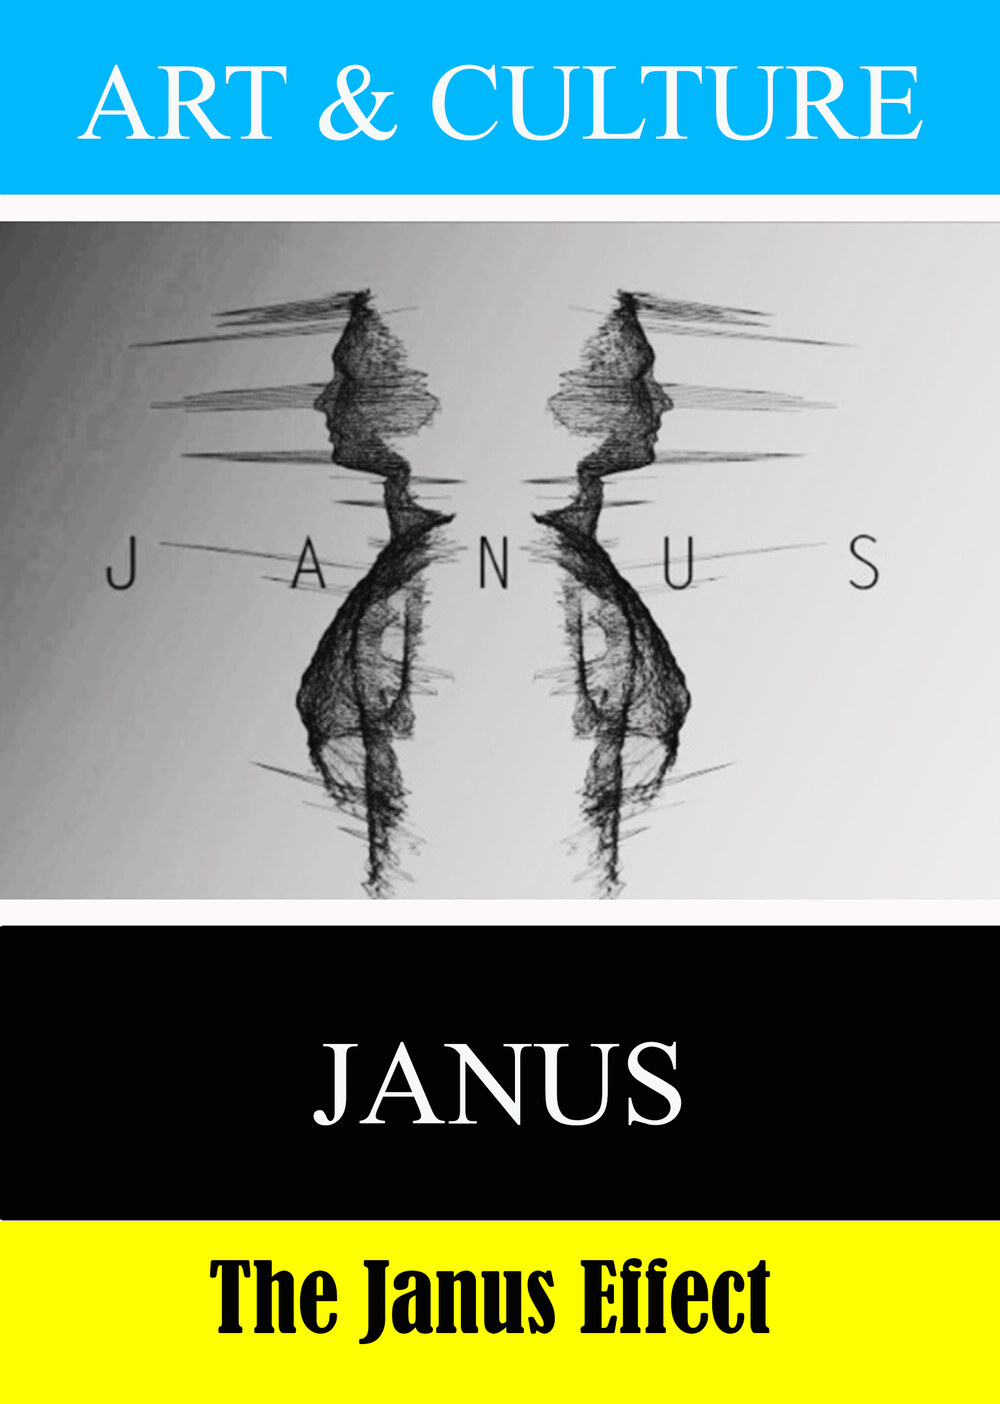 L7939 - Art & Culture: The Janus Effect